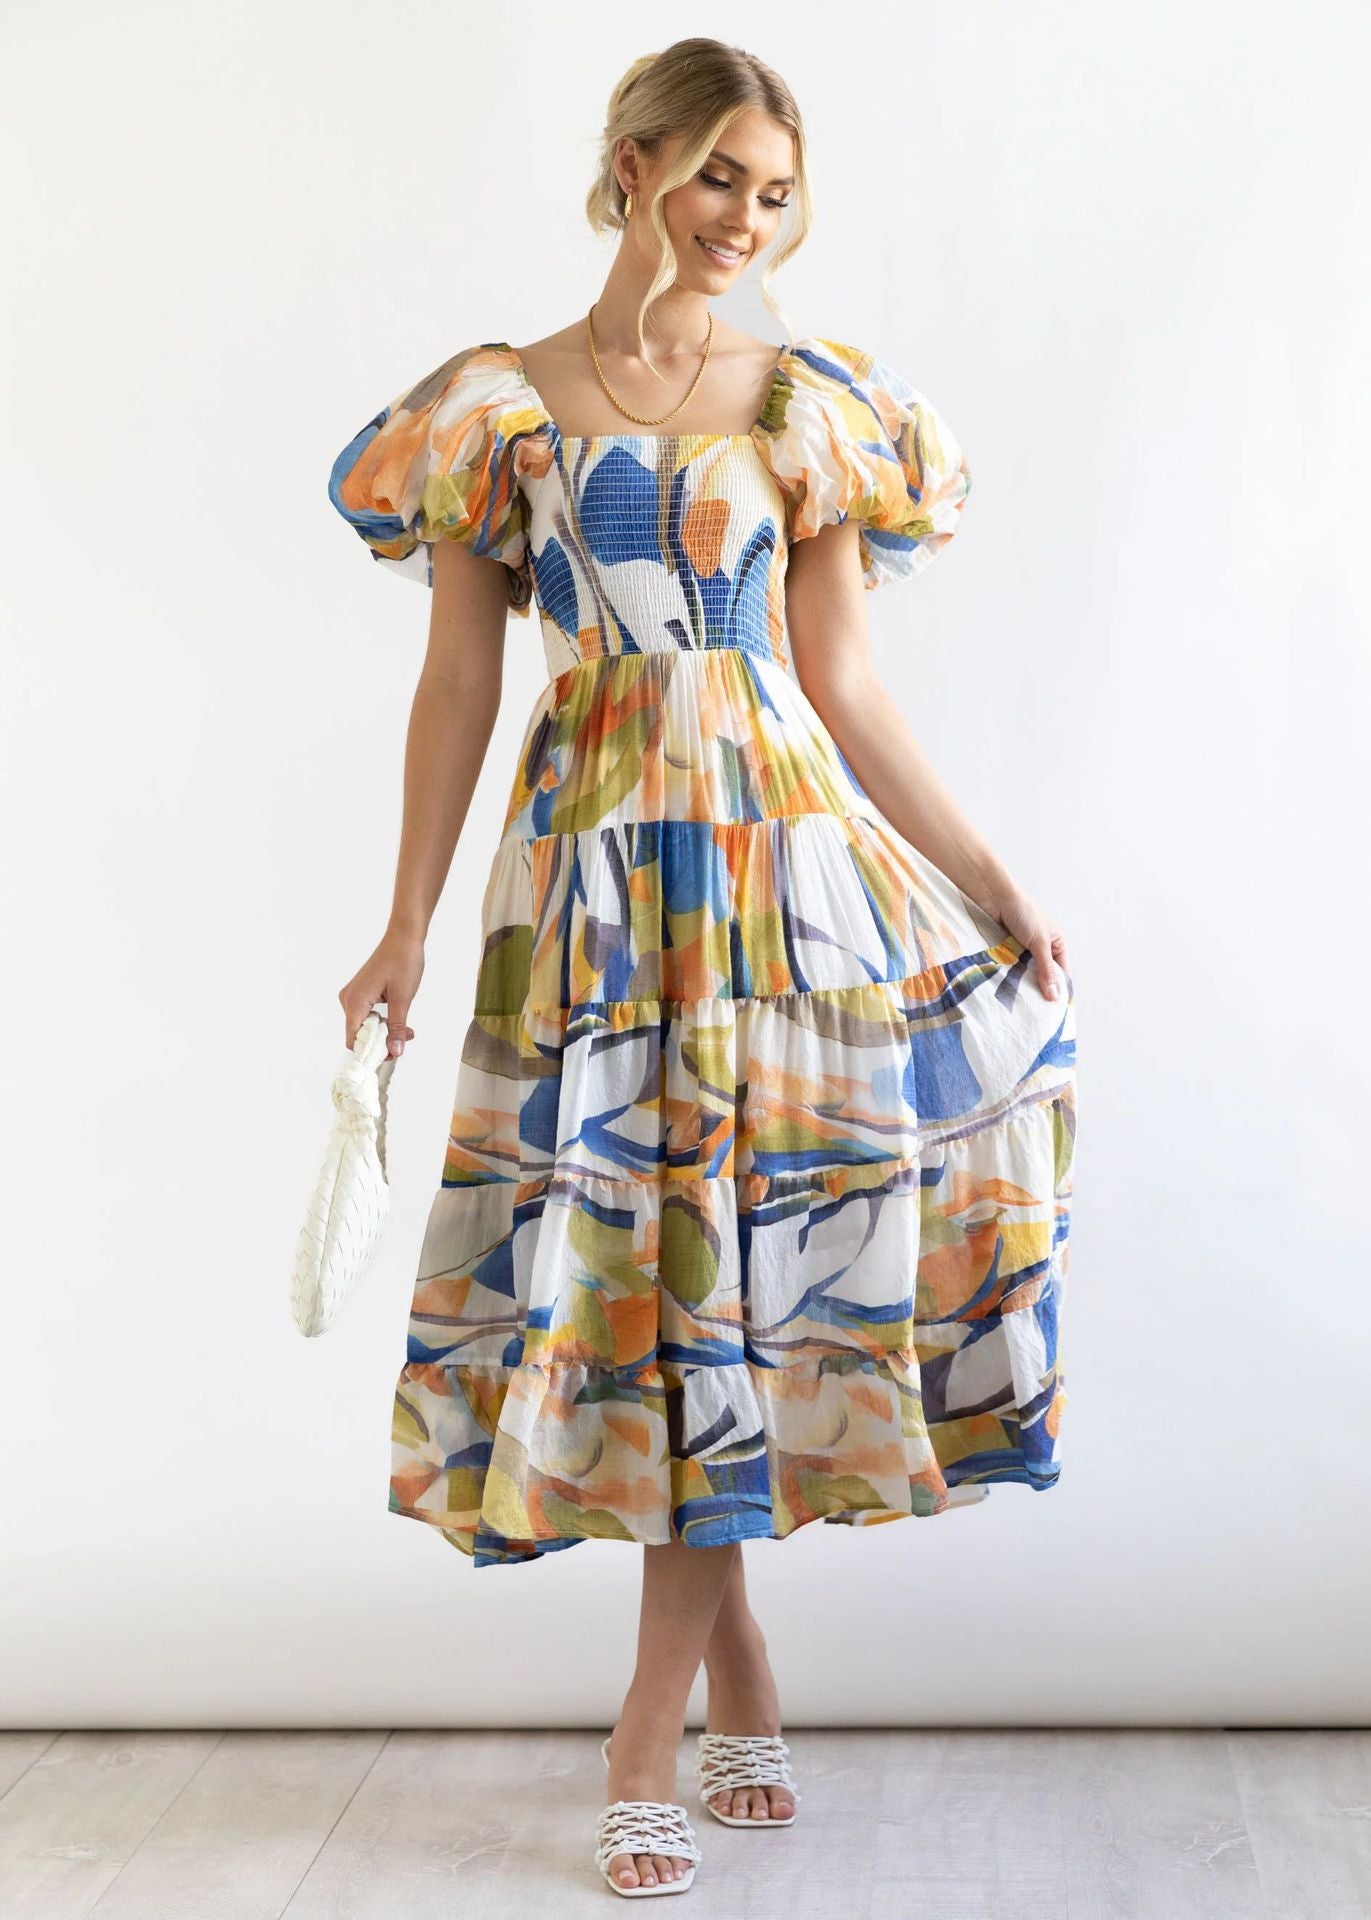 Women's Slim Fit Backless Large Swing Dress off-Neck Printed Dress